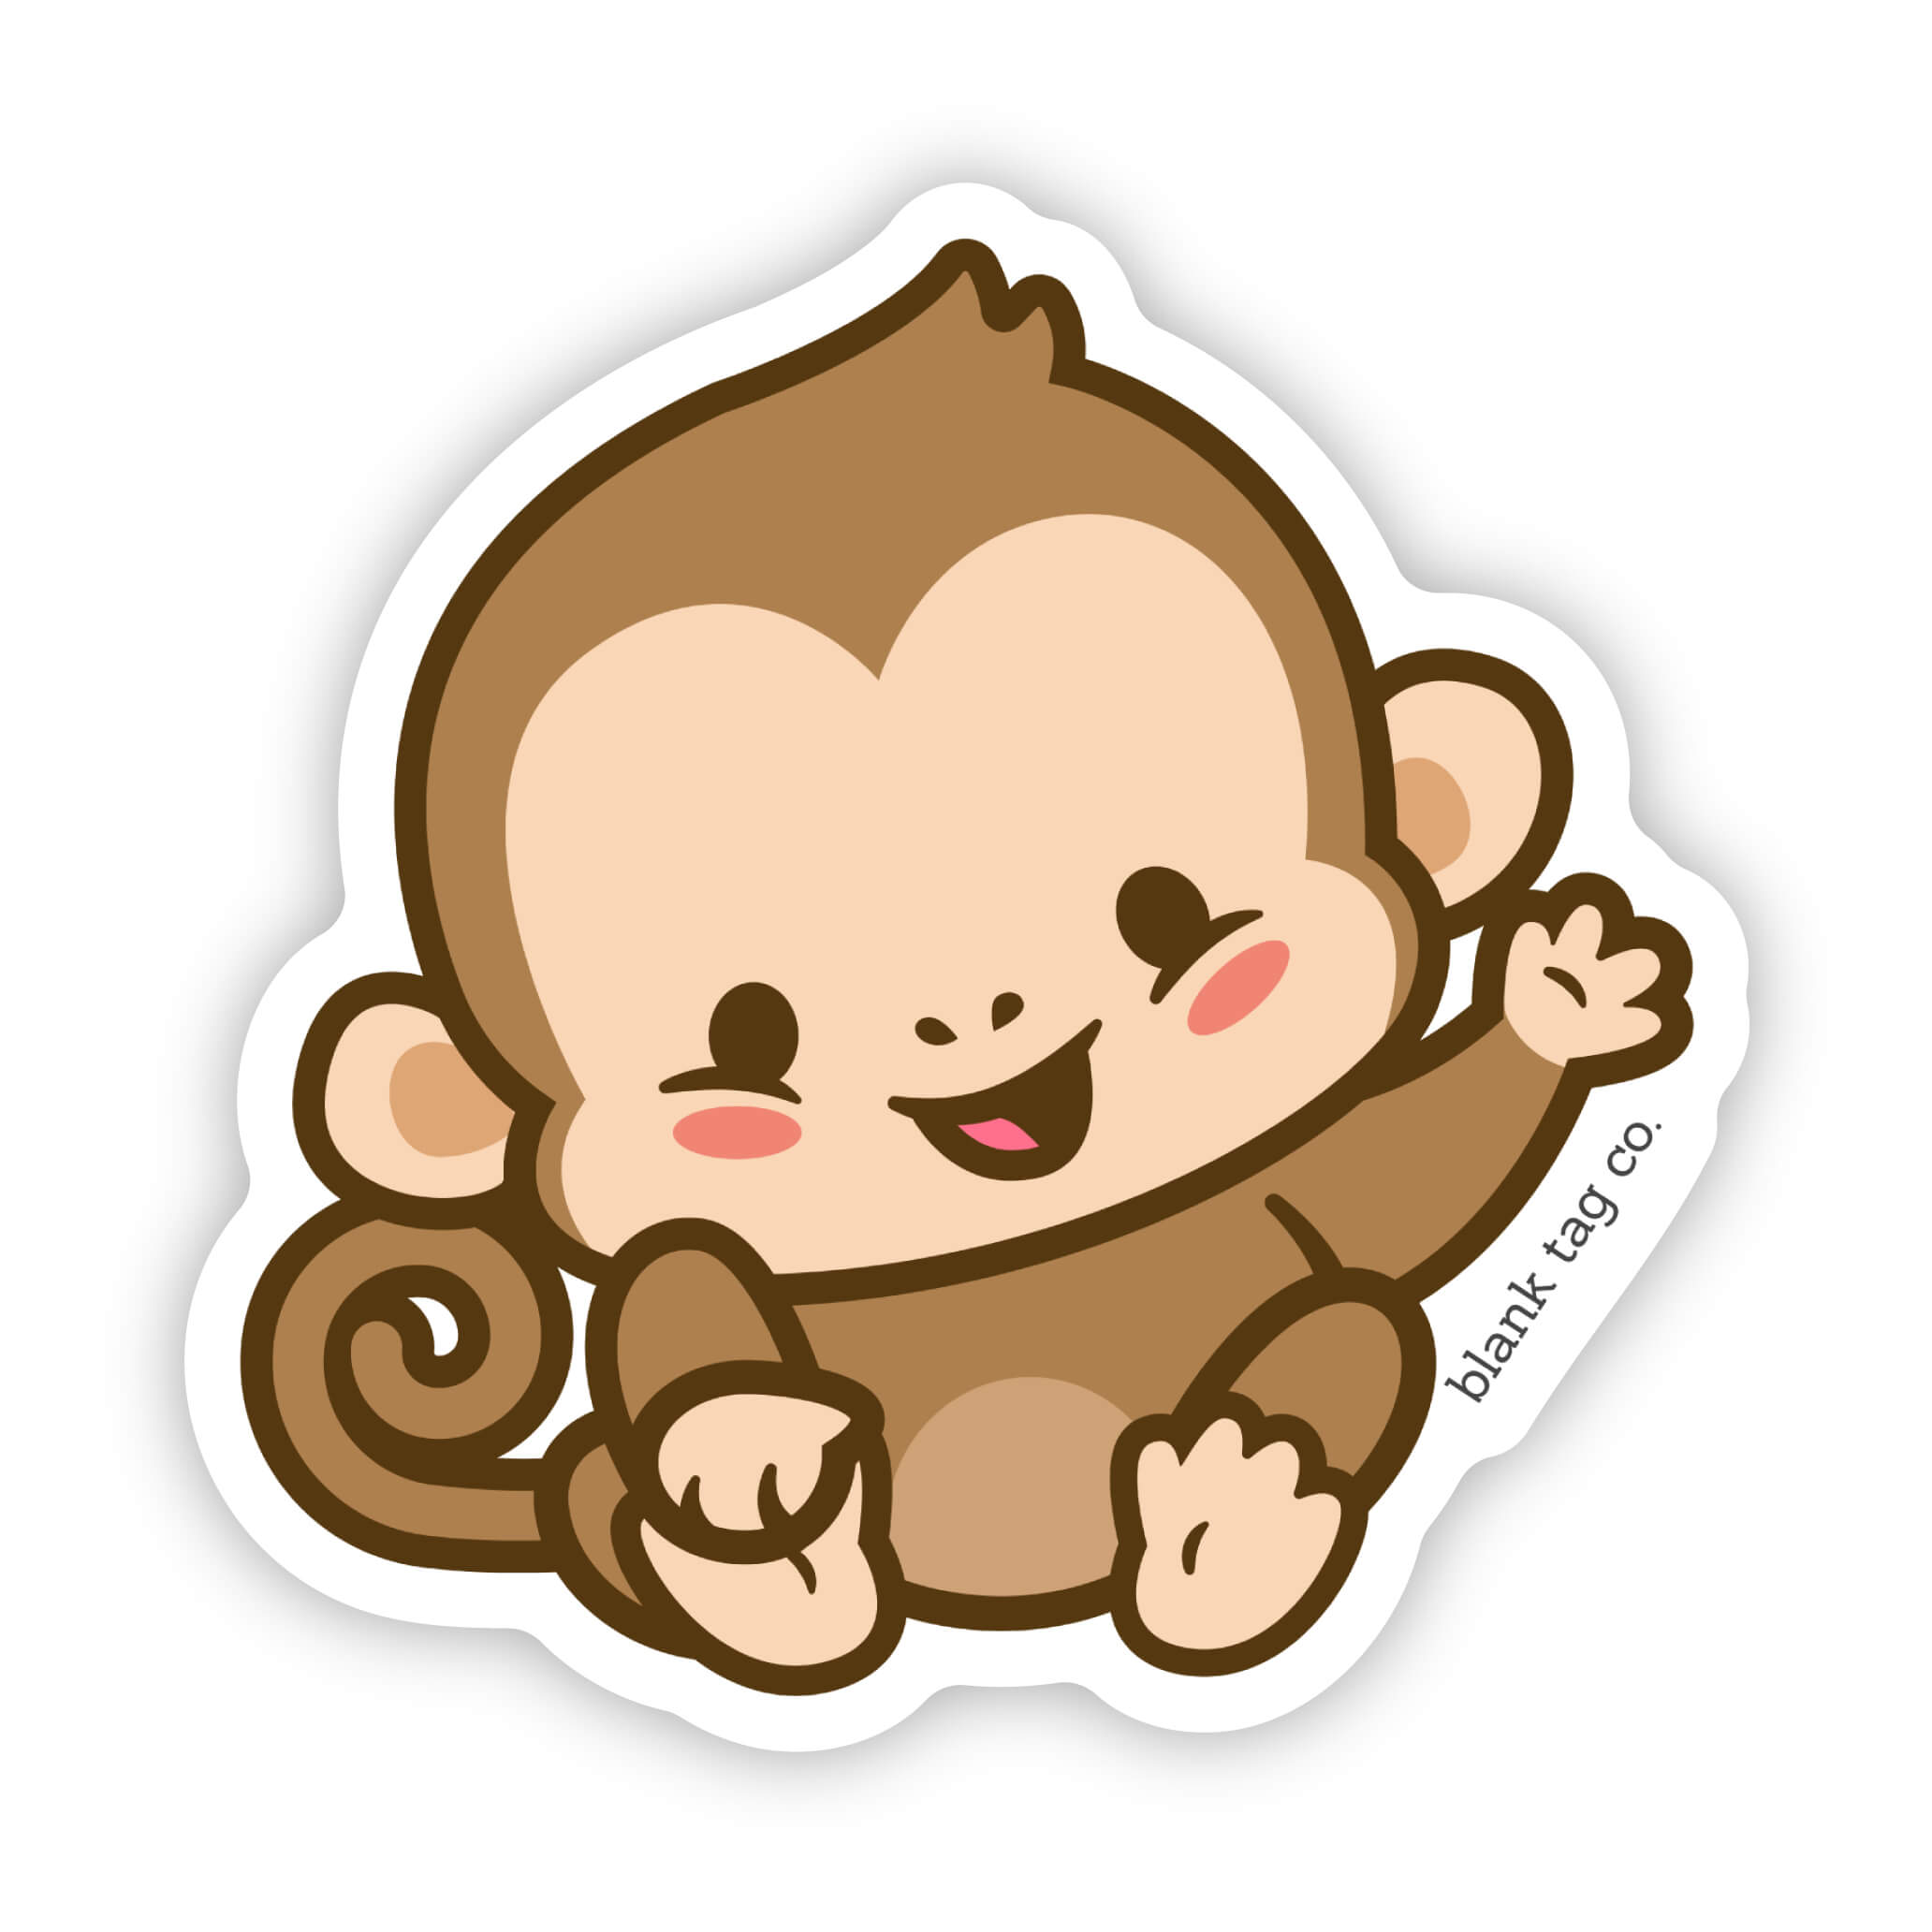 The Monkey Sticker